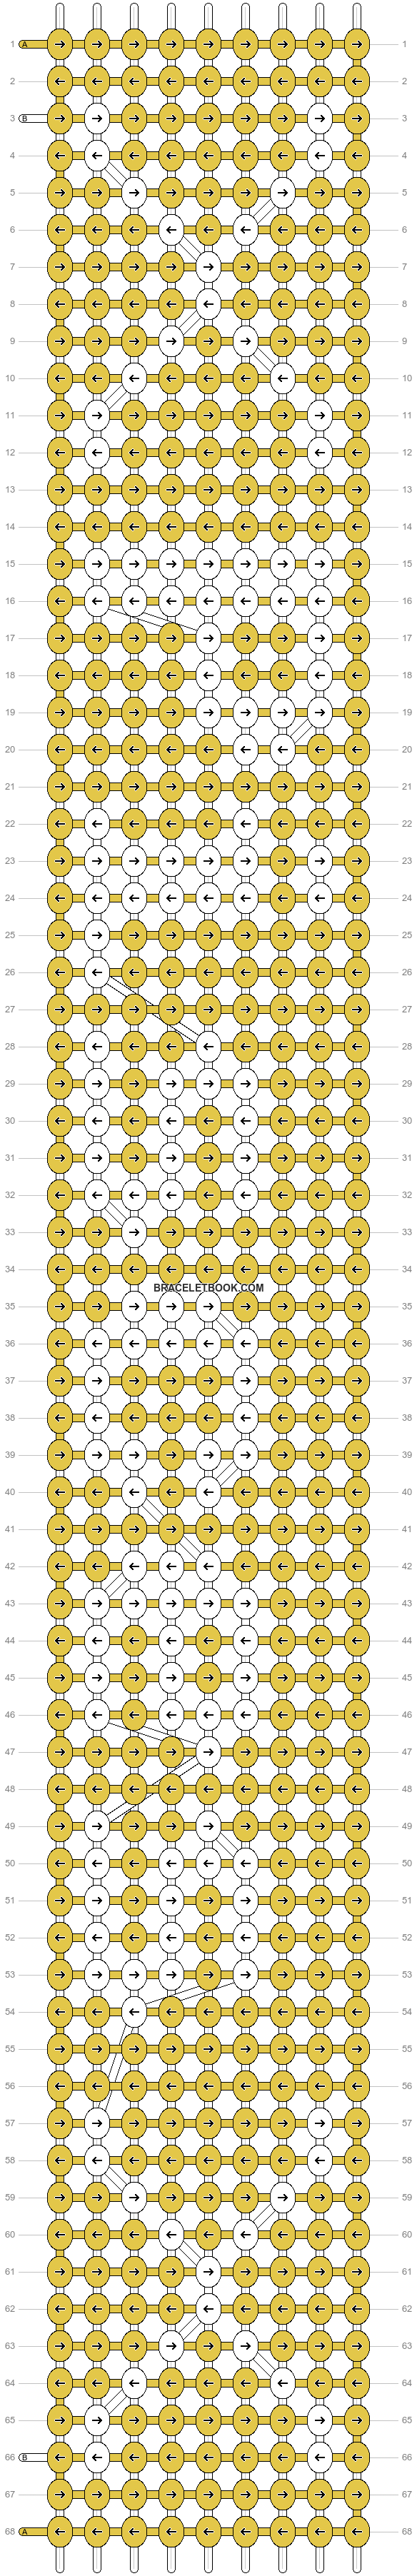 Alpha pattern #6062 variation #14126 pattern